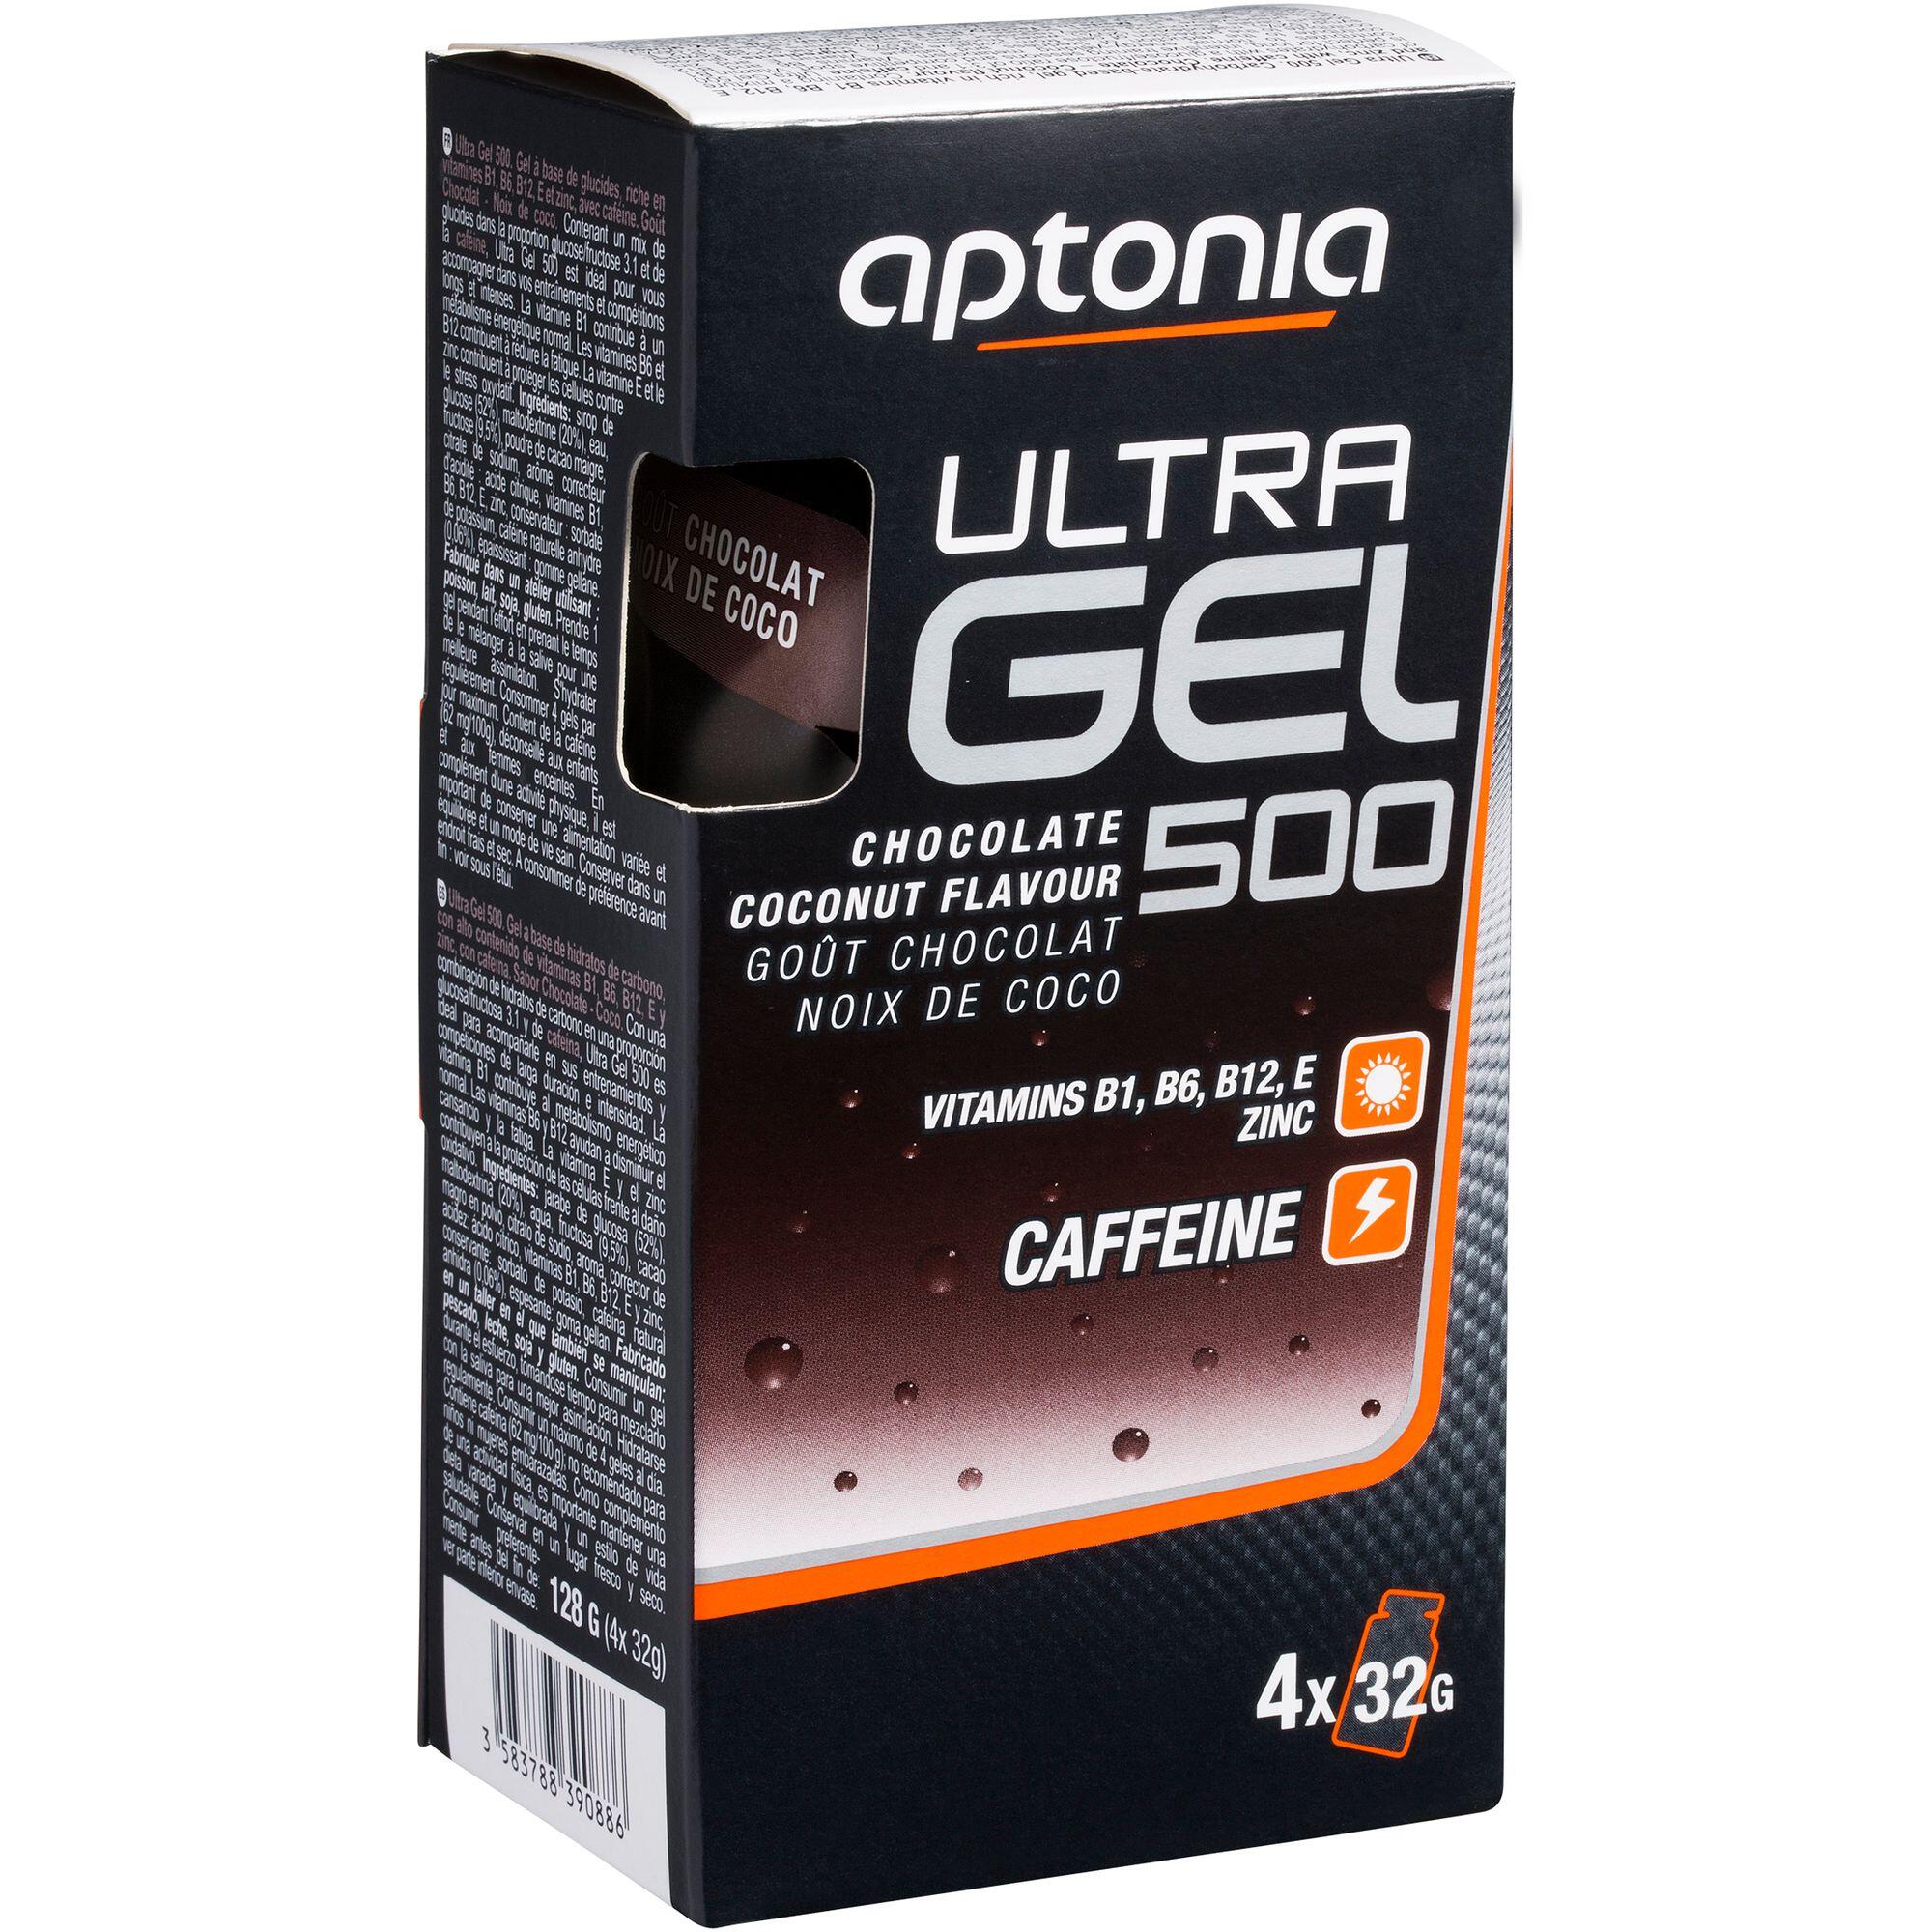 APTONIA Ultra Gel 500 Energy Gel 4x32g - Chocolate/Coconut